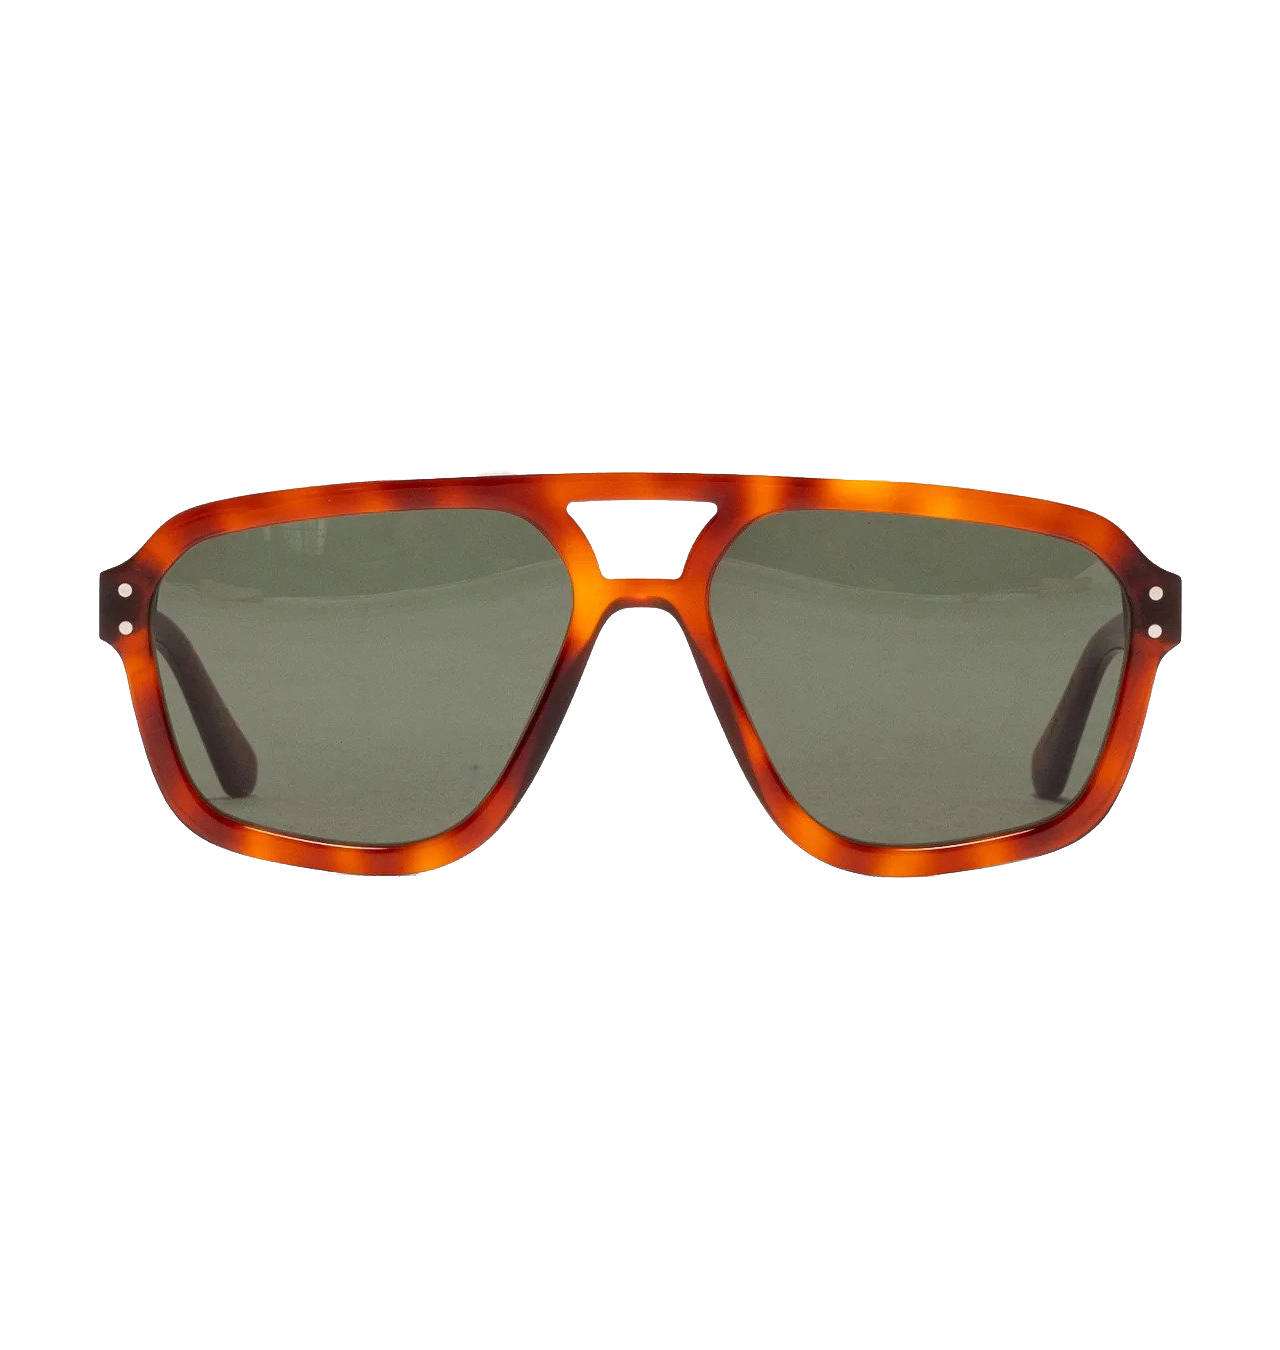 Monokel Eyewear - Jet Amber Sunglasses - Green Solid Lens